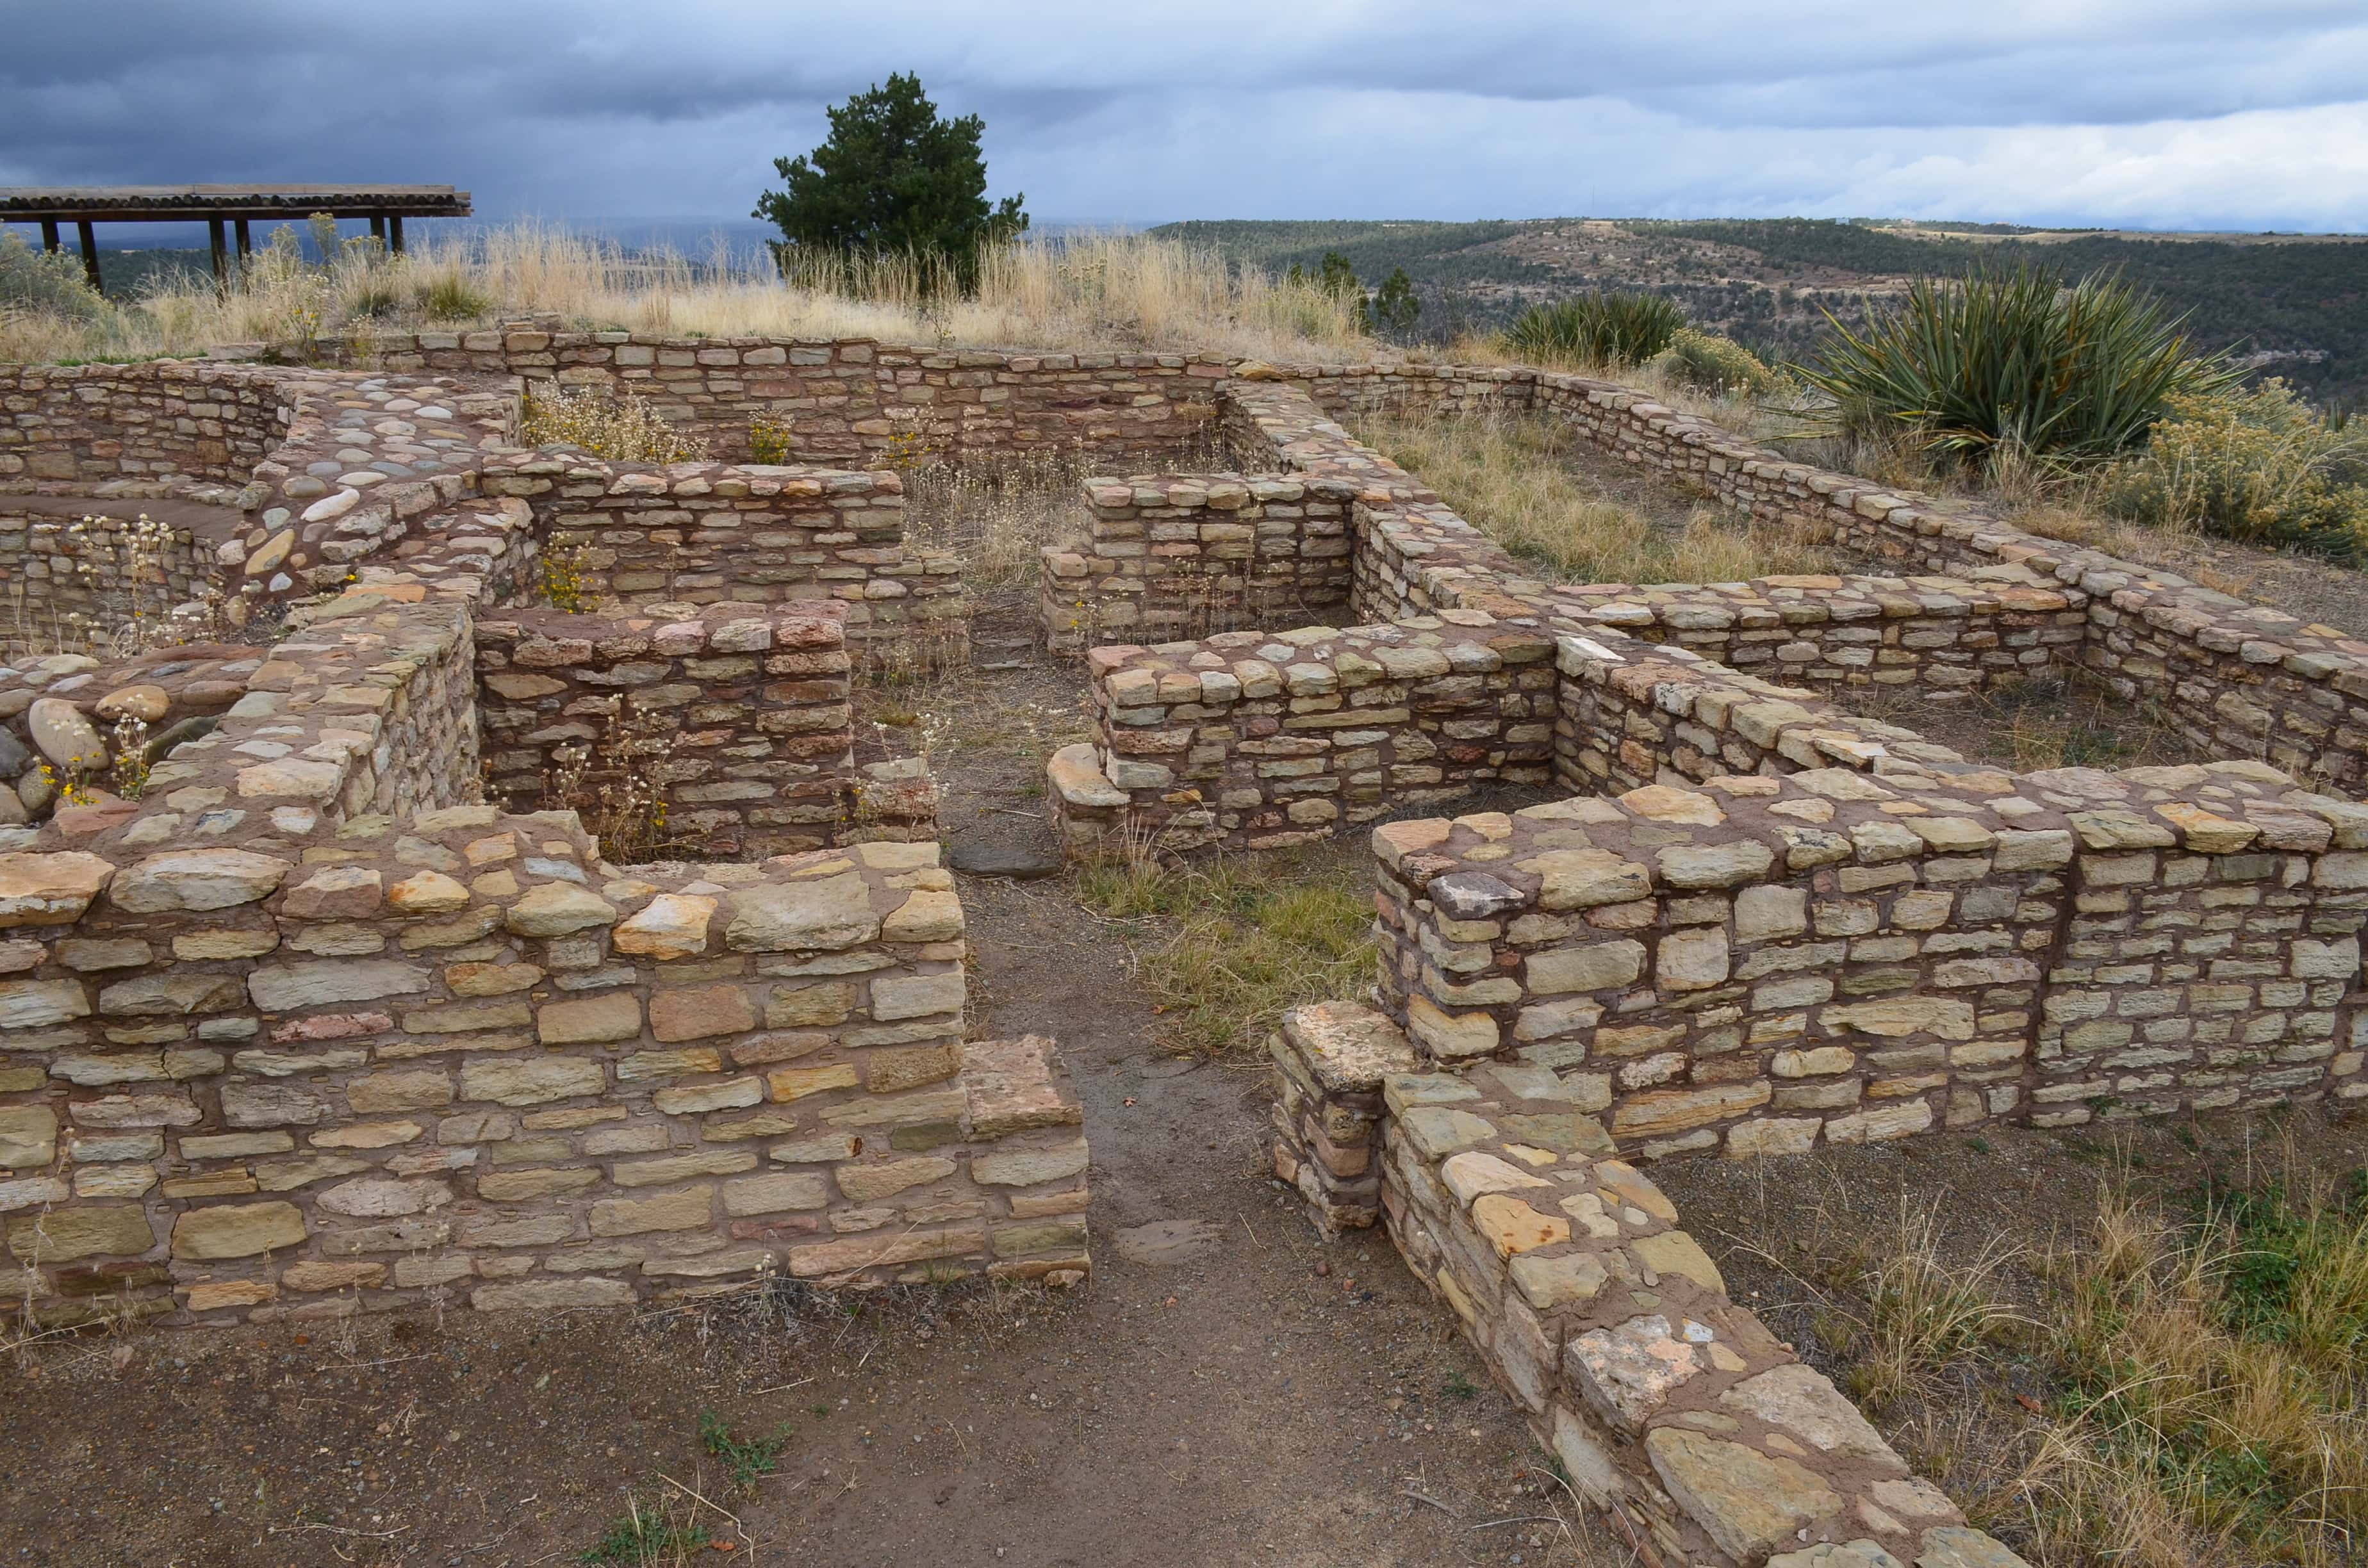 Escalante Pueblo at Canyons of the Ancients National Monument in Colorado